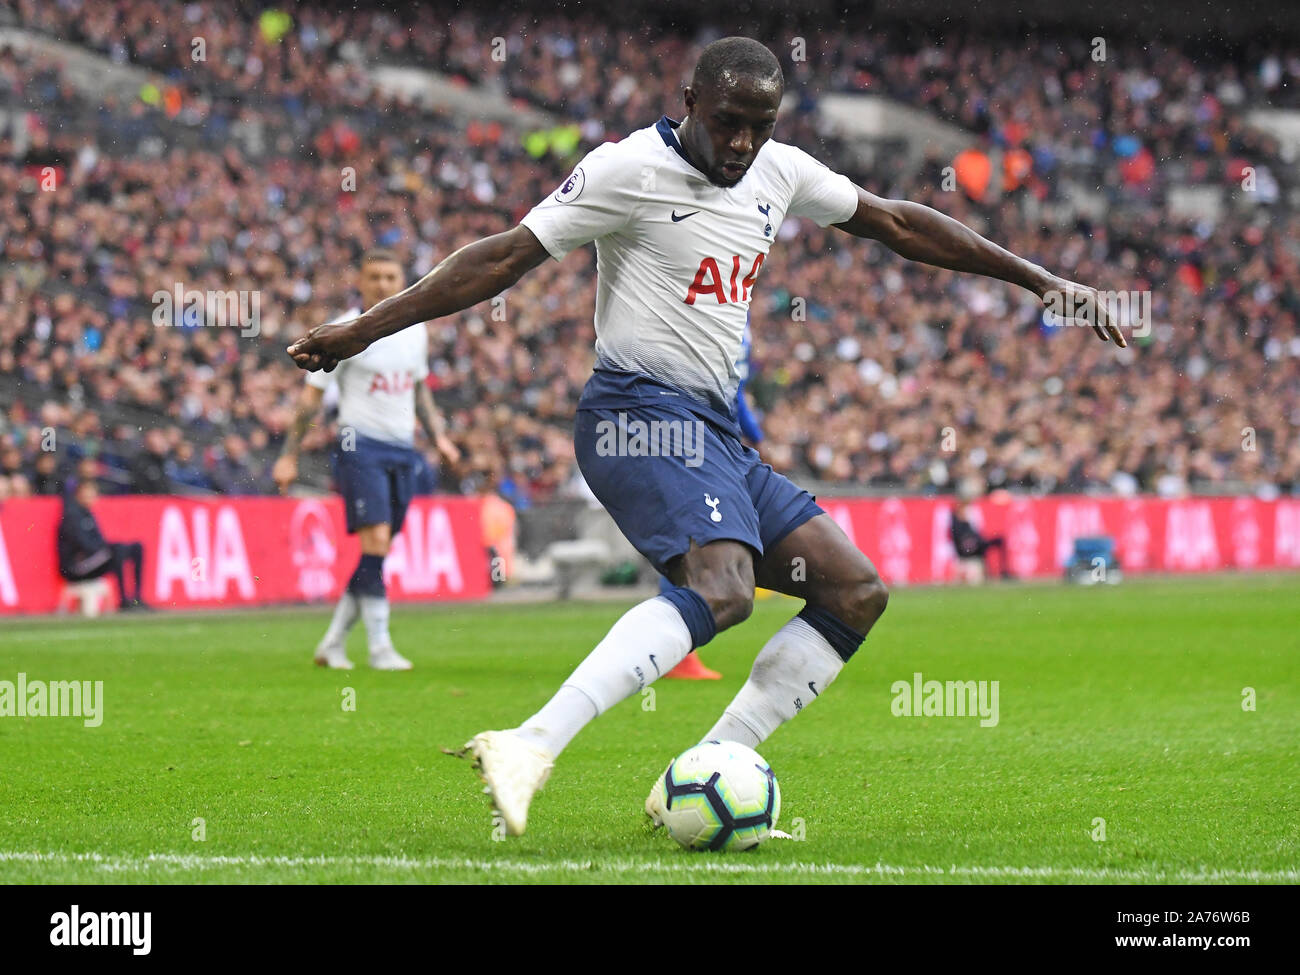 Londra, Inghilterra - Ottobre 6, 2018: Moussa Sissoko del Tottenham mostrato durante il 2018/19 English Premier League tra Tottenham Hotspur e Cardiff City a Wembley Stadium. Foto Stock